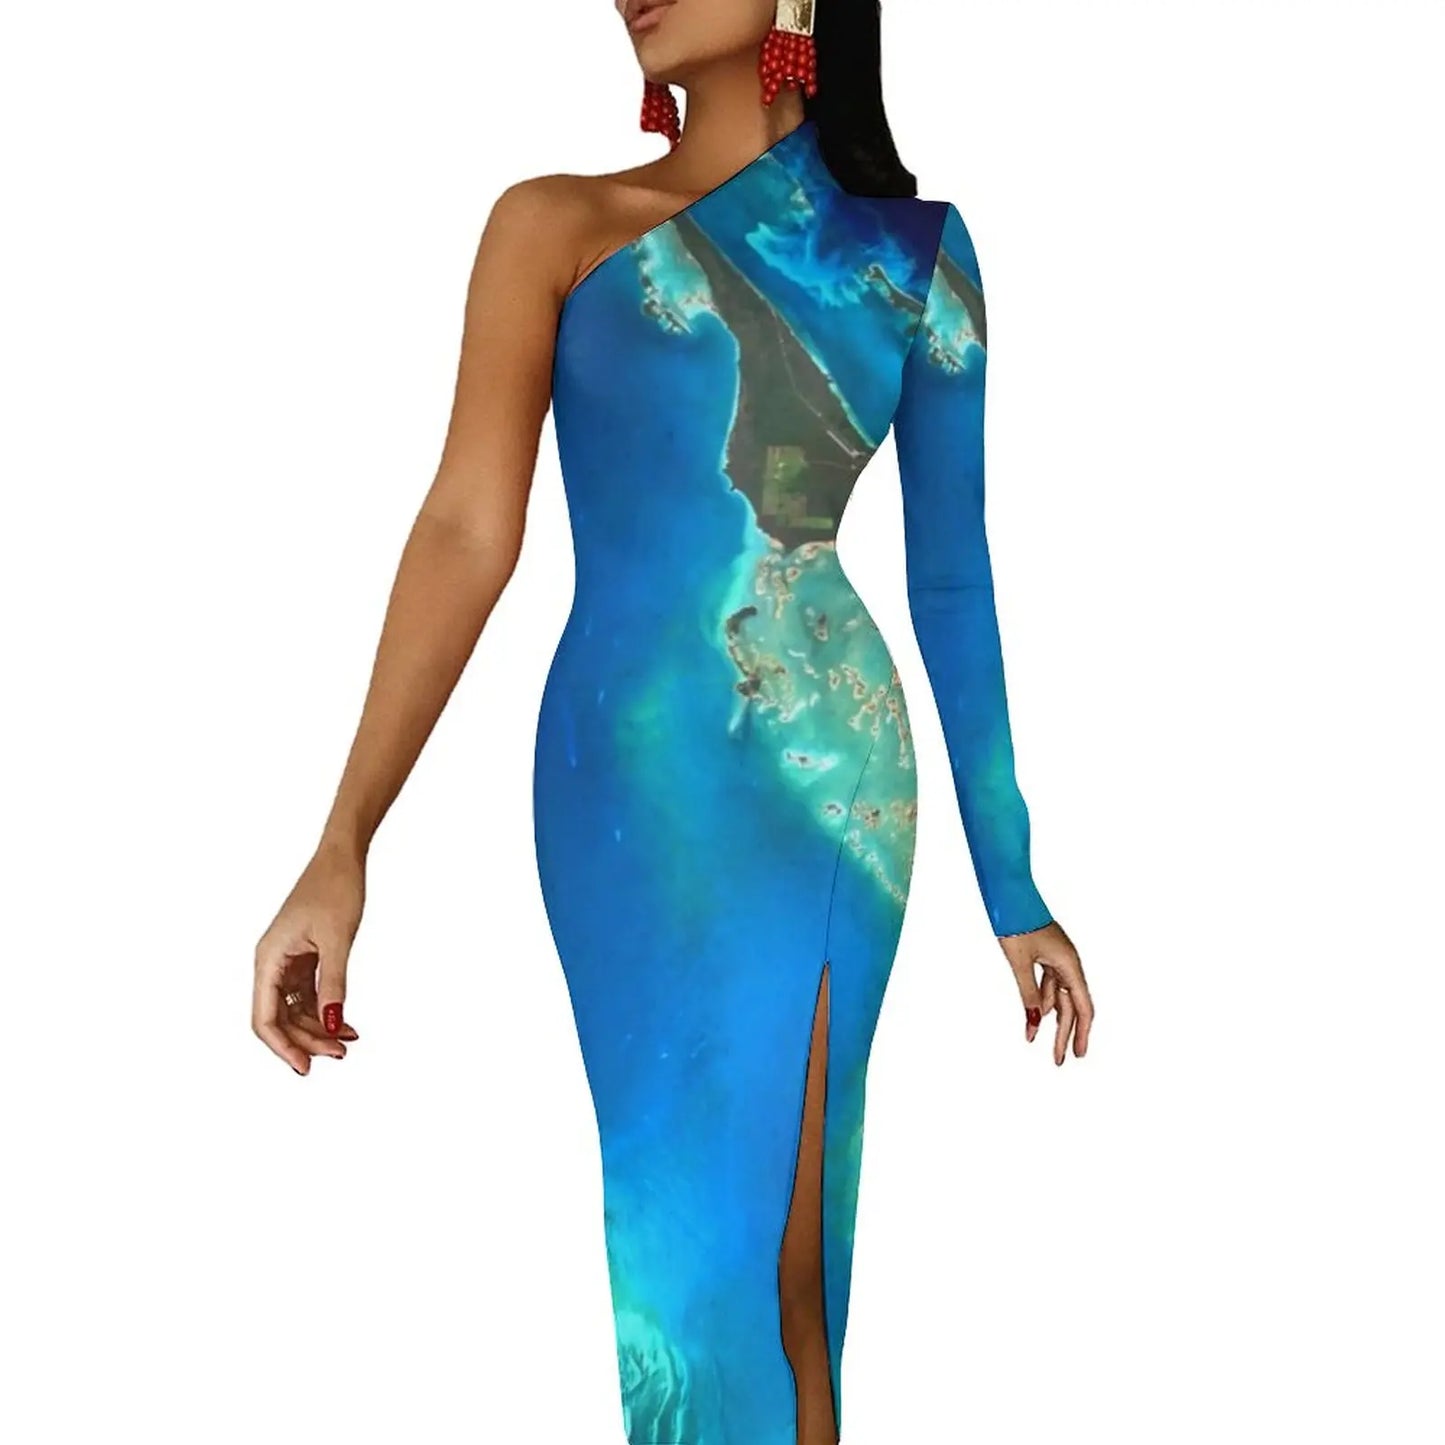 Earth Map Maxi Dress One Shoulder World Maps Print Party Bodycon Dresses Spring Elegant Dress Ladies Graphic Vestido